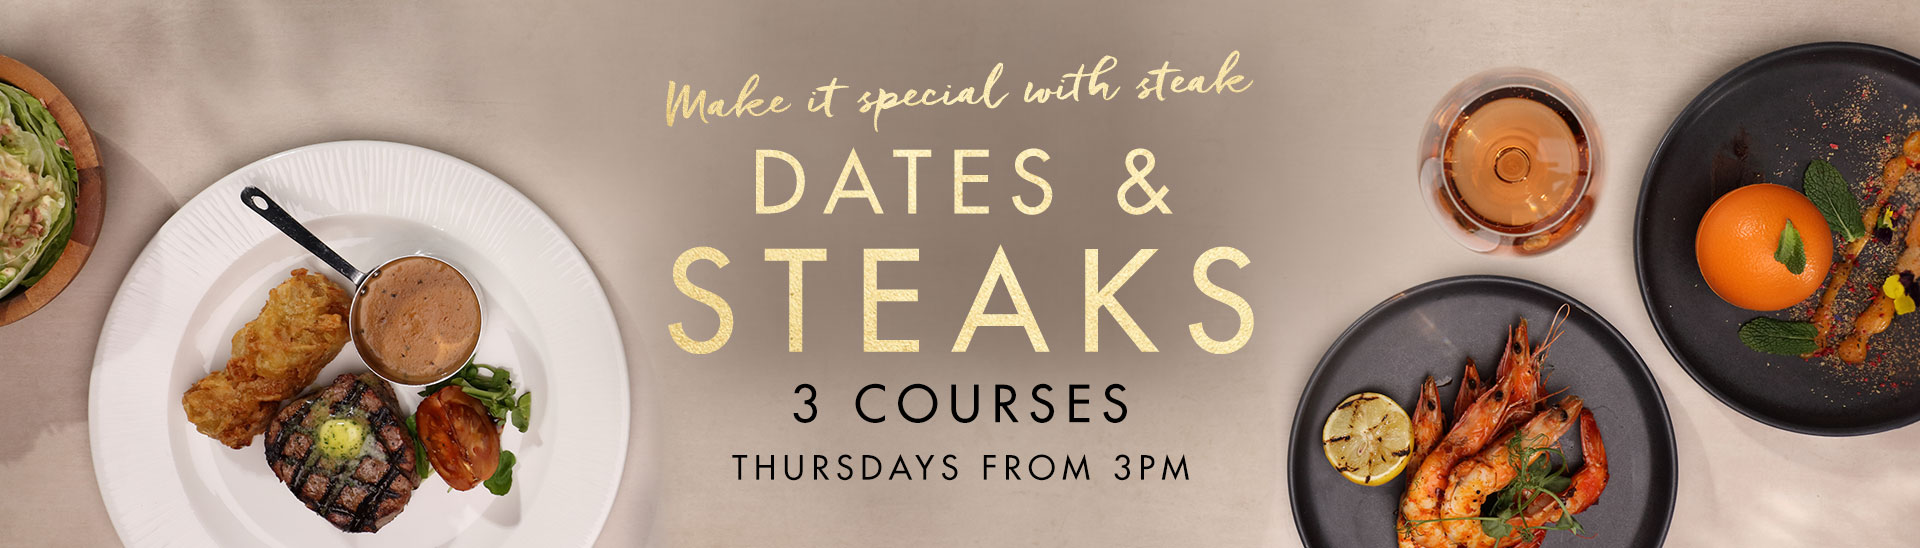 Dates & Steaks at Miller & Carter Rickmansworth